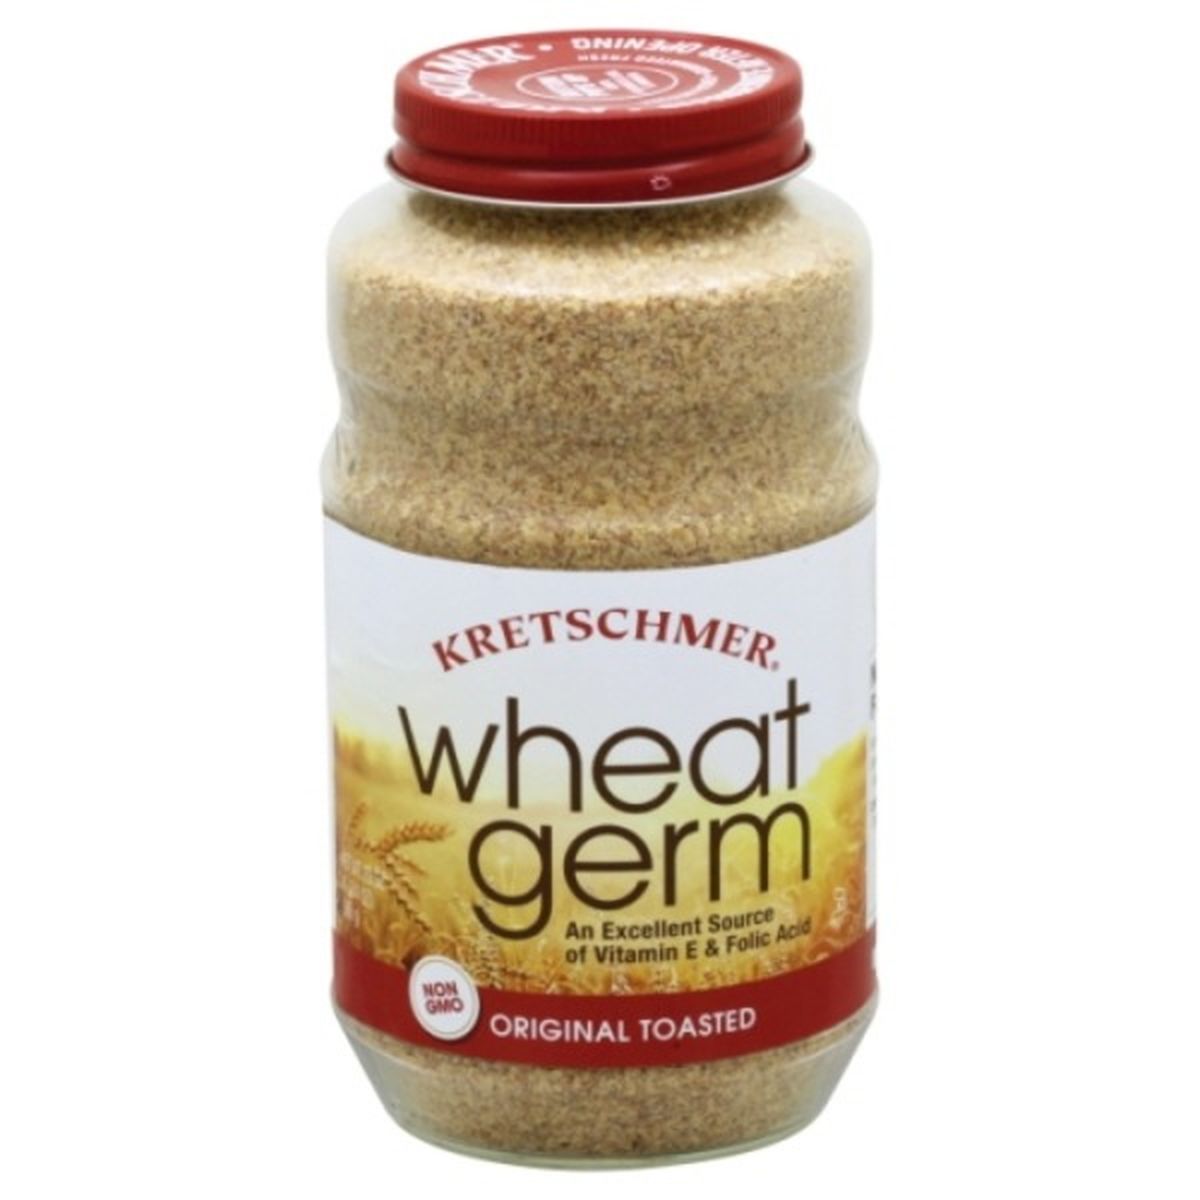 Calories in Kretschmer Wheat Germ, Original Toasted